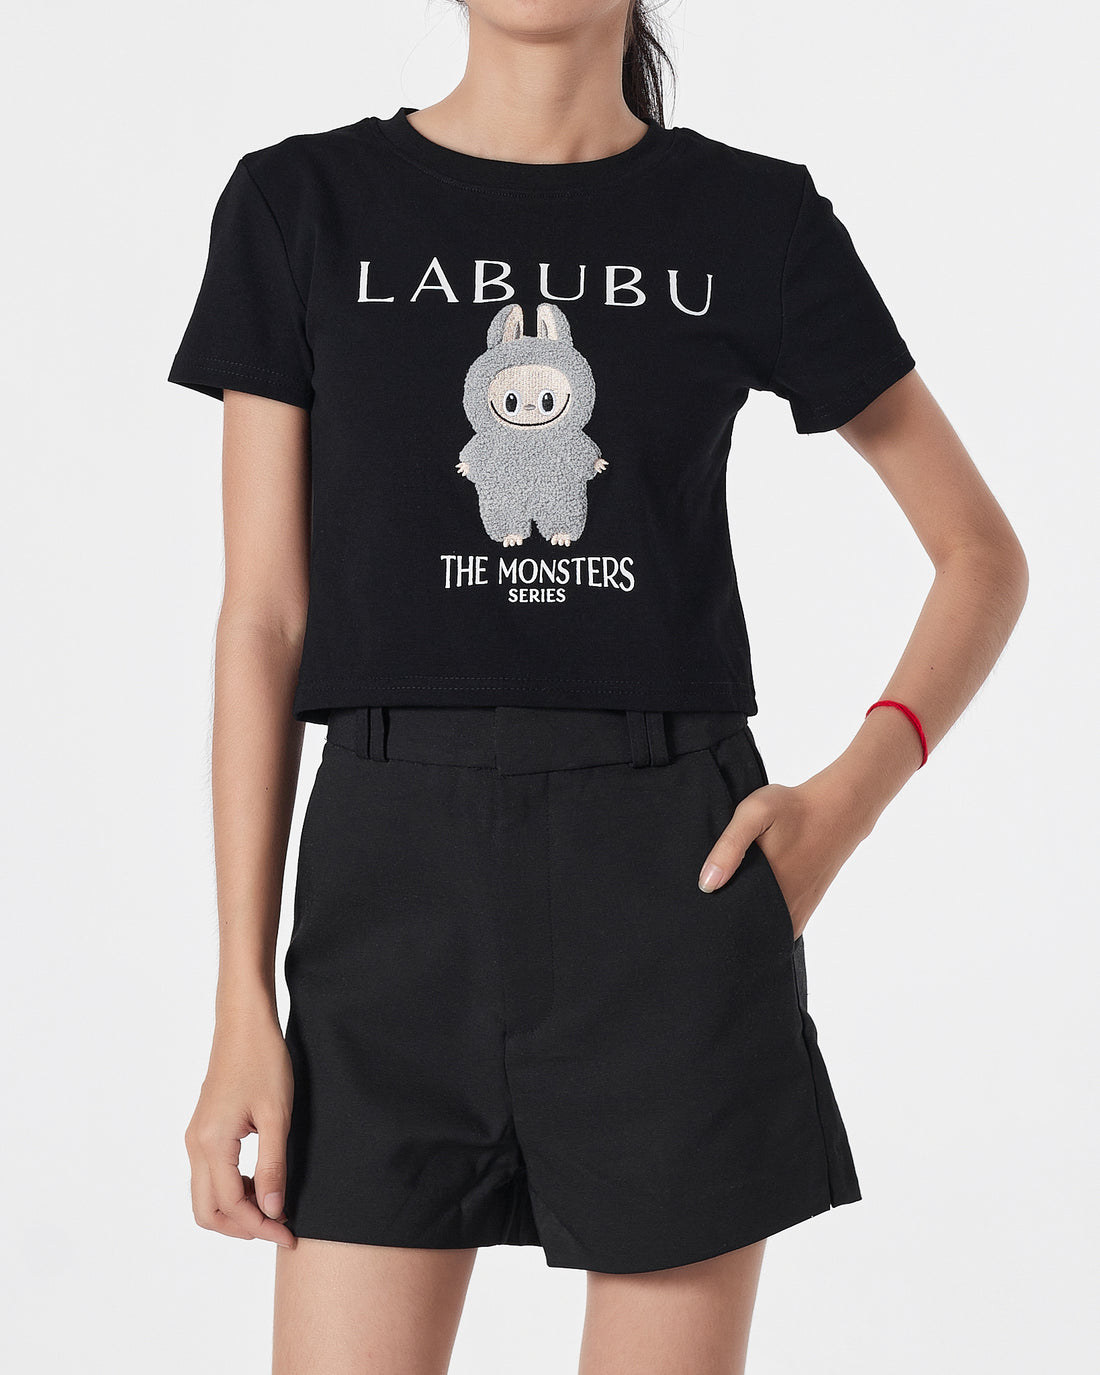 Labubu Lady Black T-Shirt  Crop Top 12.90